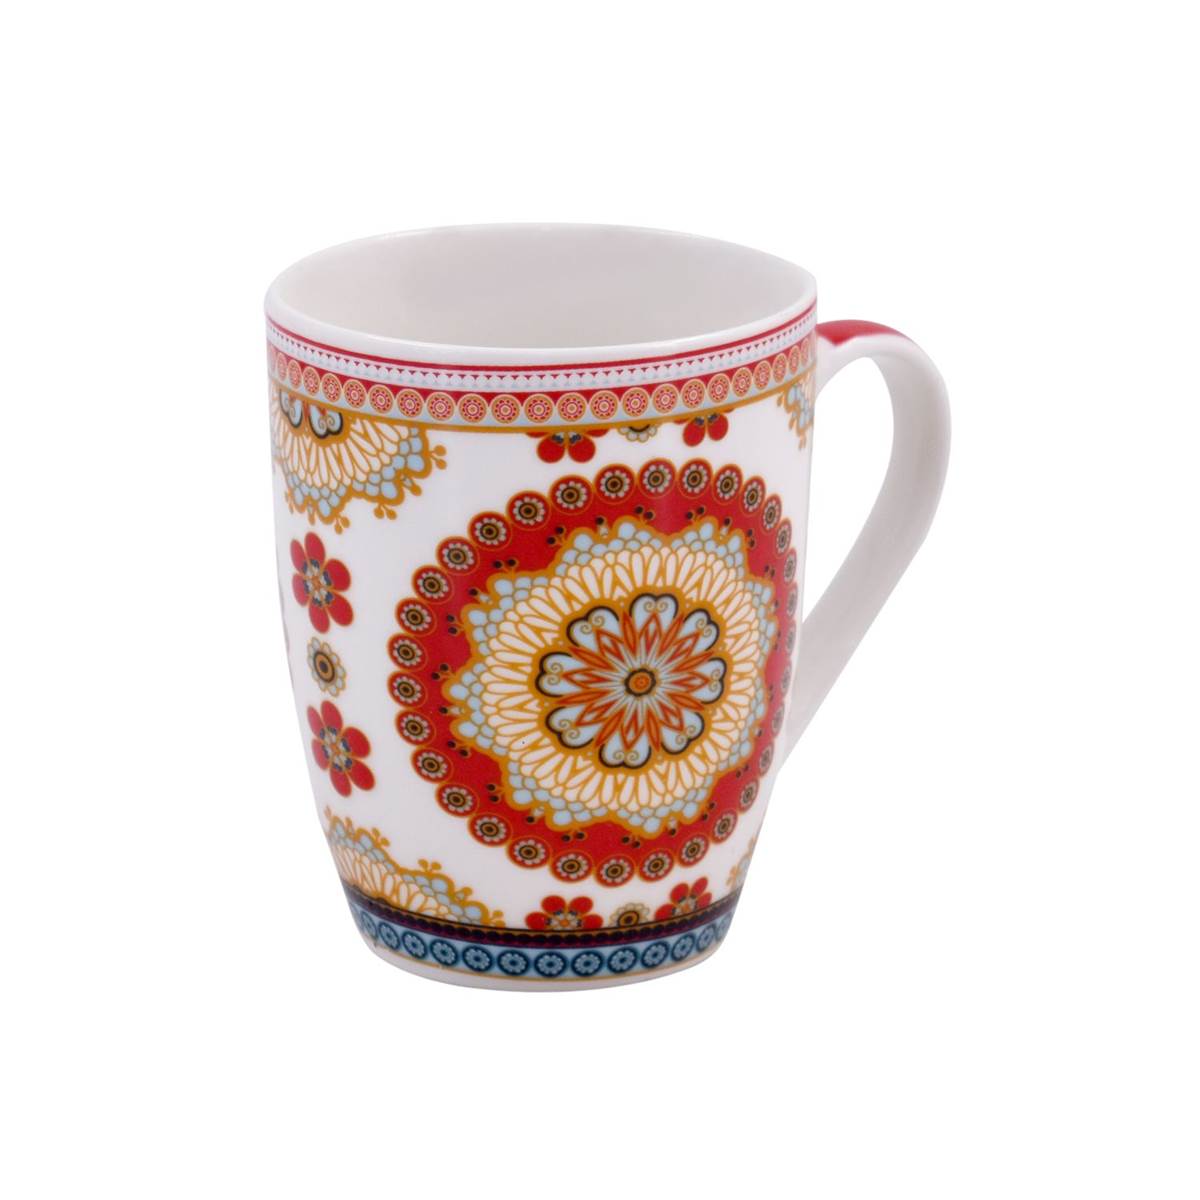 Printed Ceramic Coffee or Tea Mug with handle - 325ml (4129G-C)